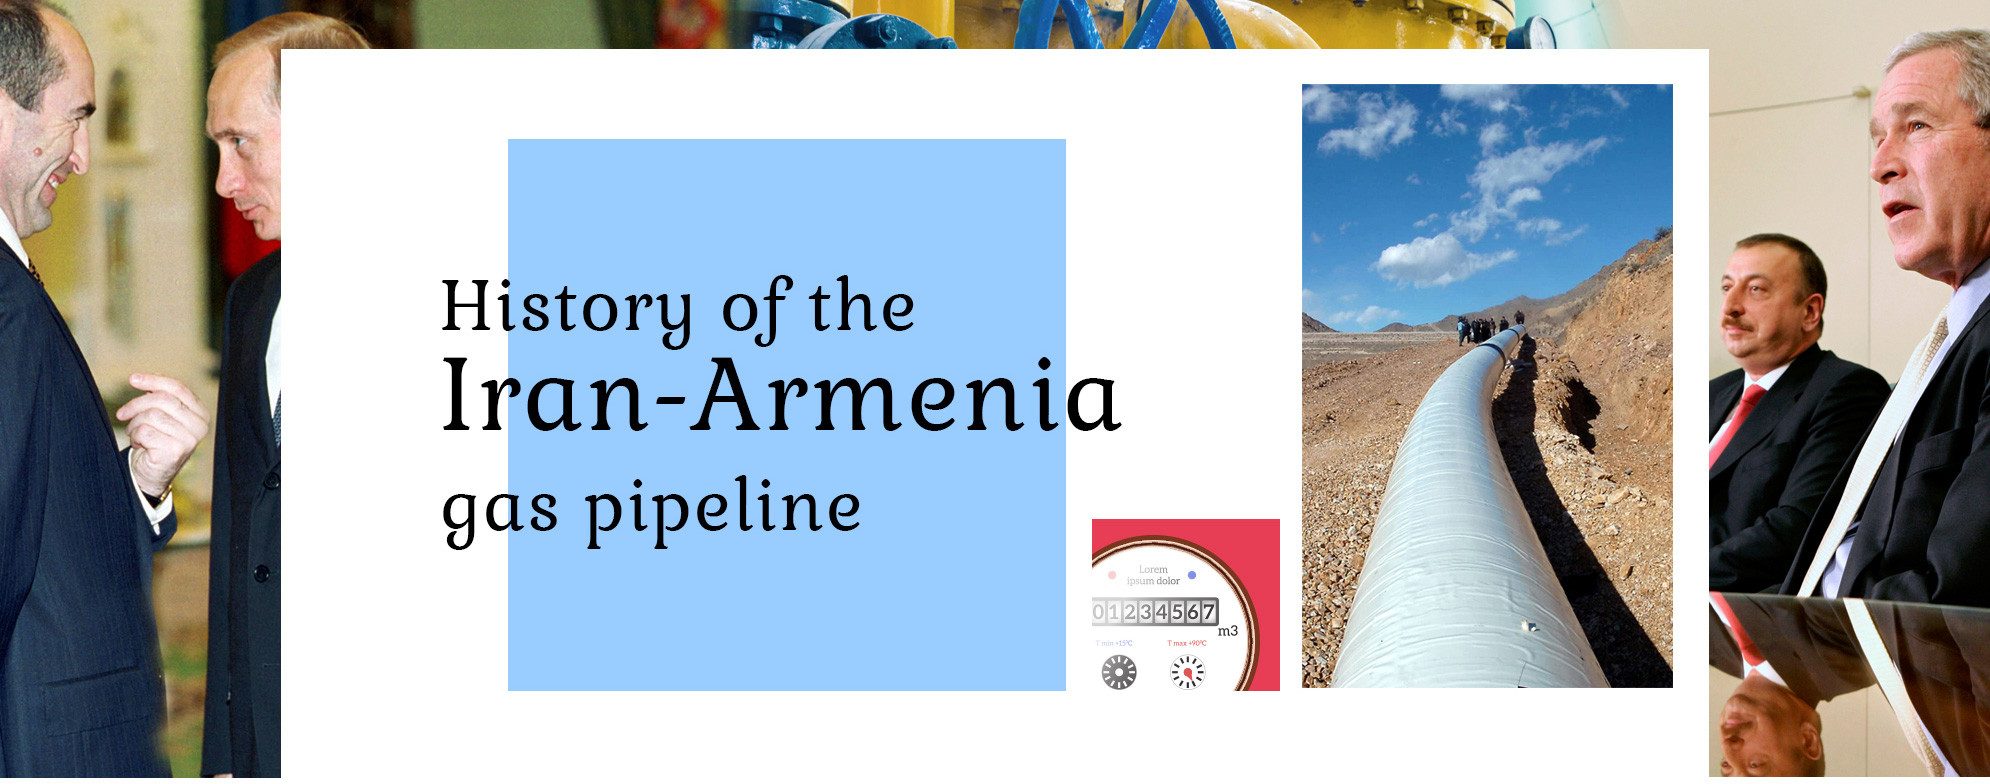 History of the Iran-Armenia gas pipeline